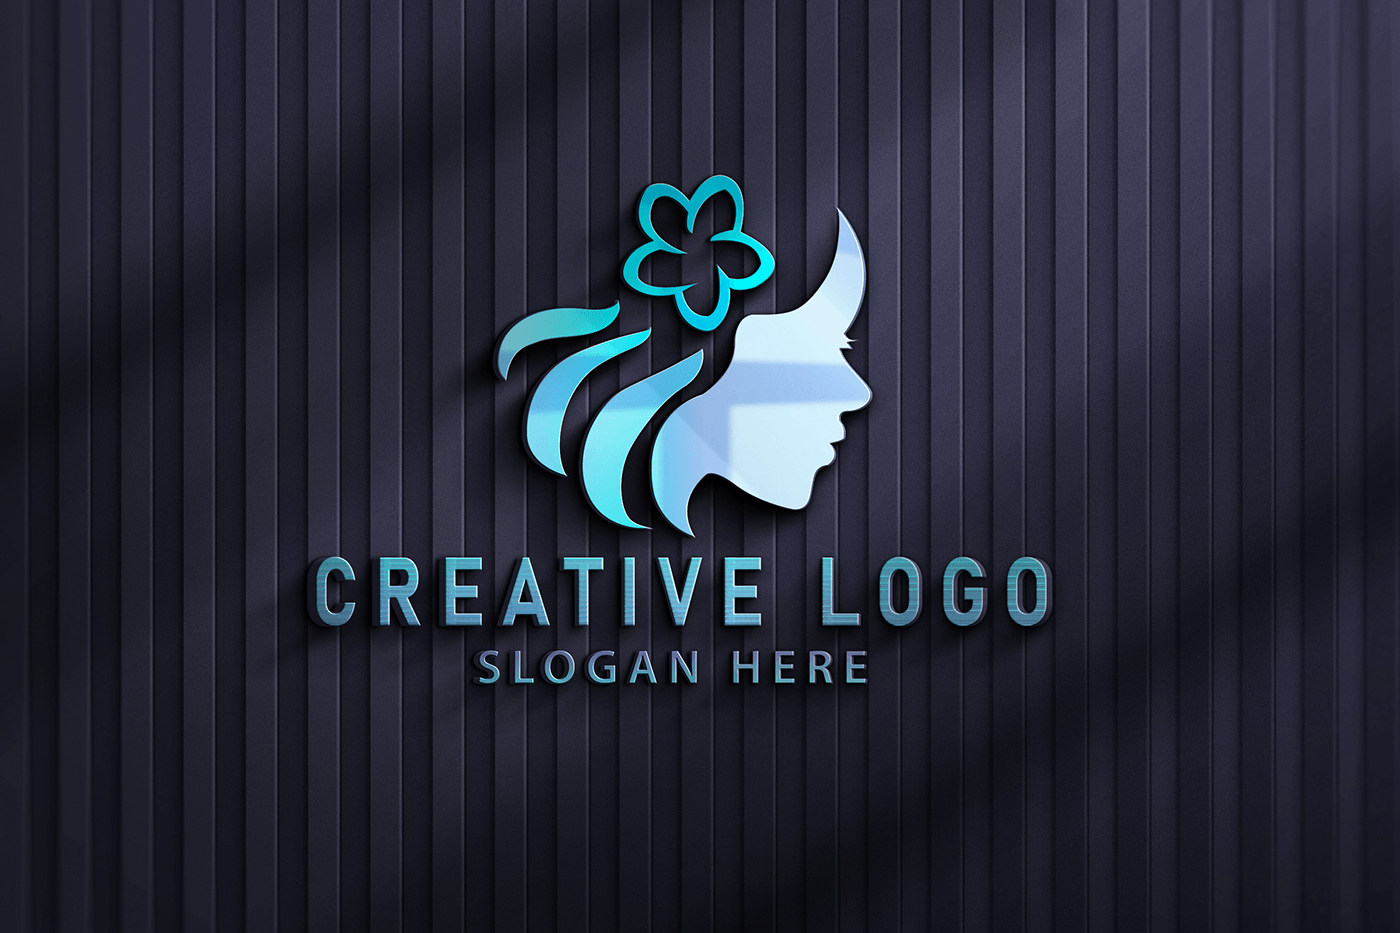 Logo Design Creative Design mindfulness mental health brand identity Logotype visual identity brand design fresh mind logo